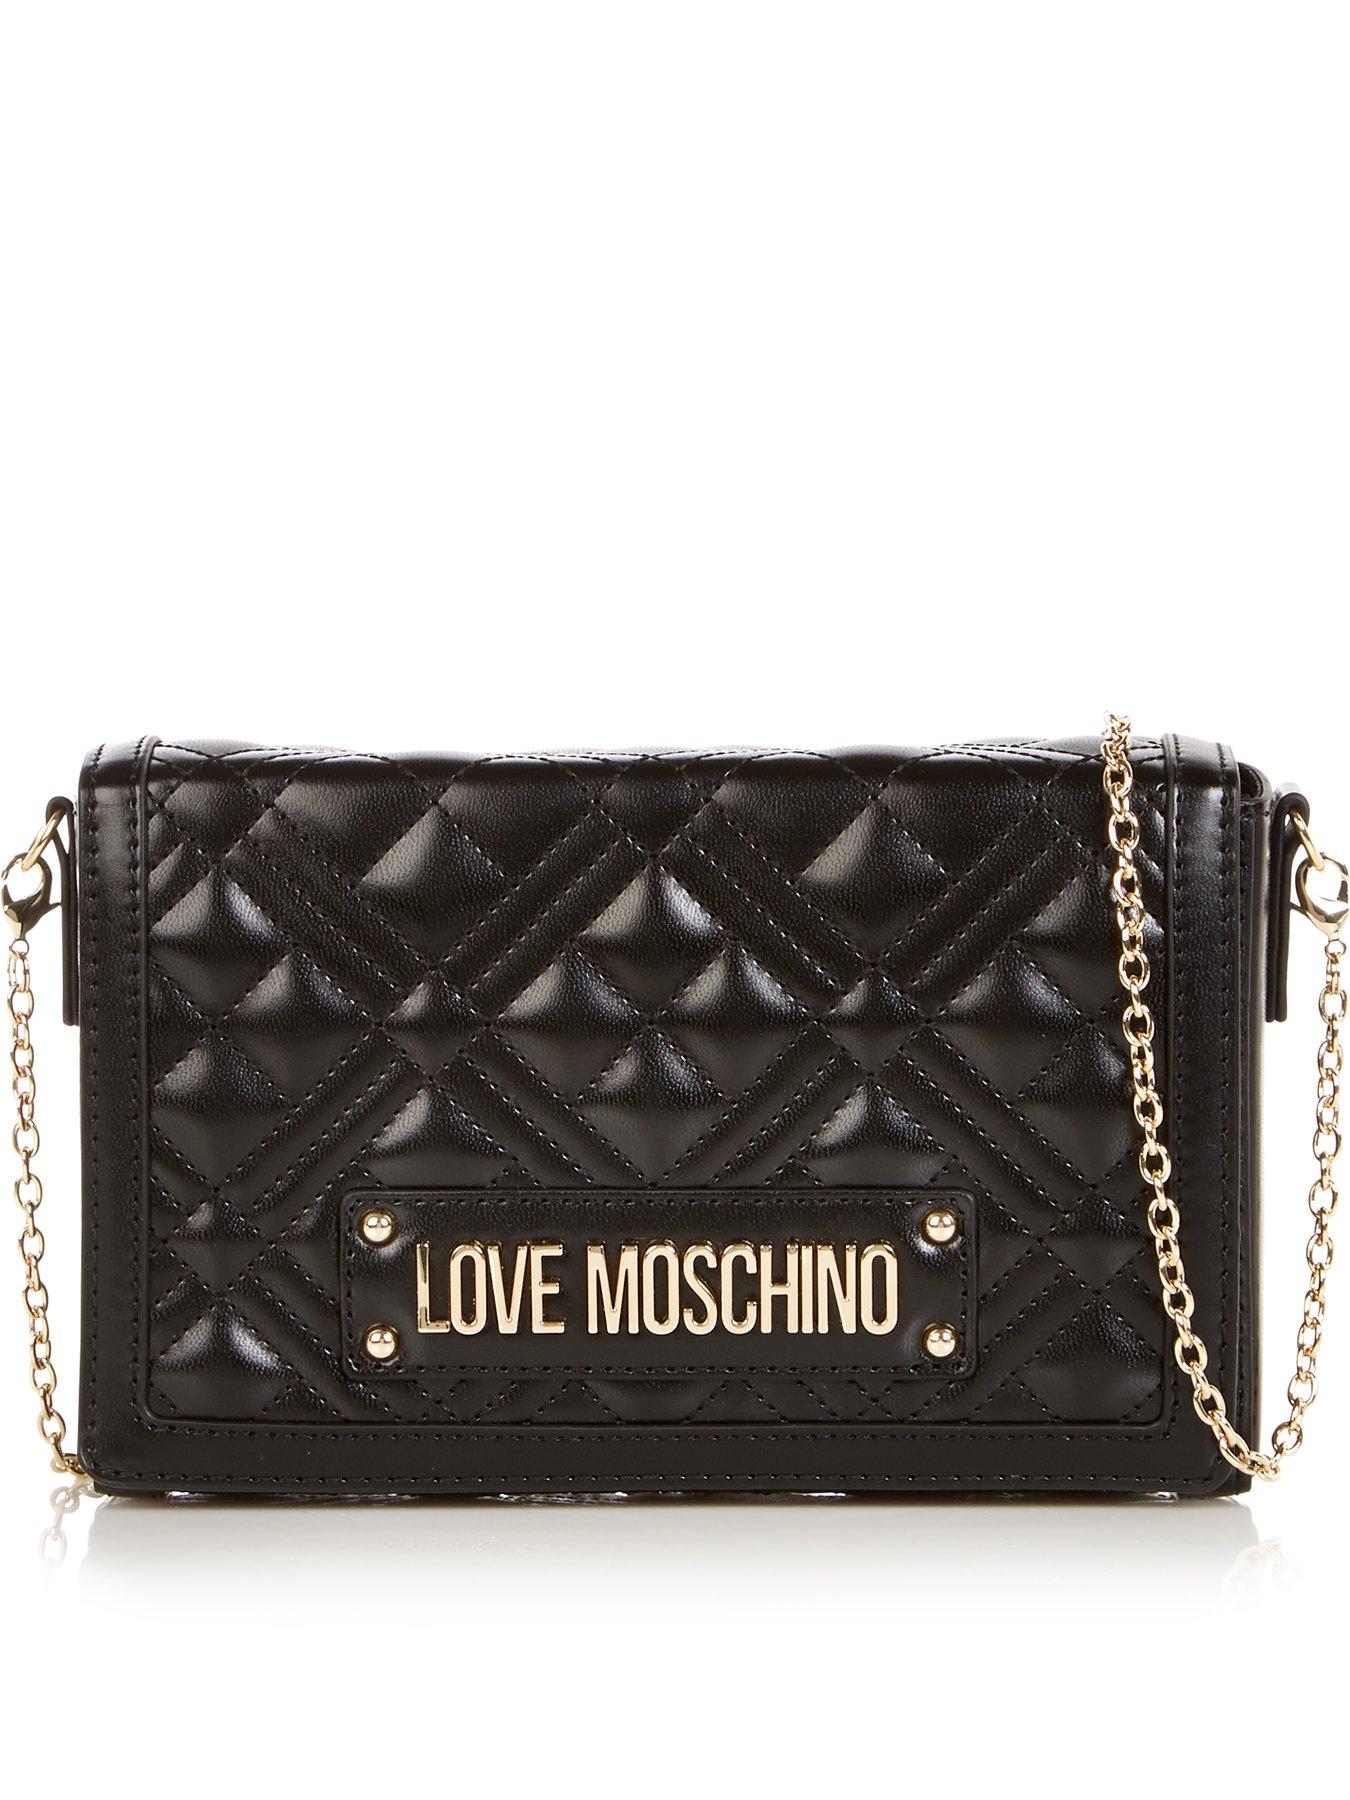 black love moschino bag